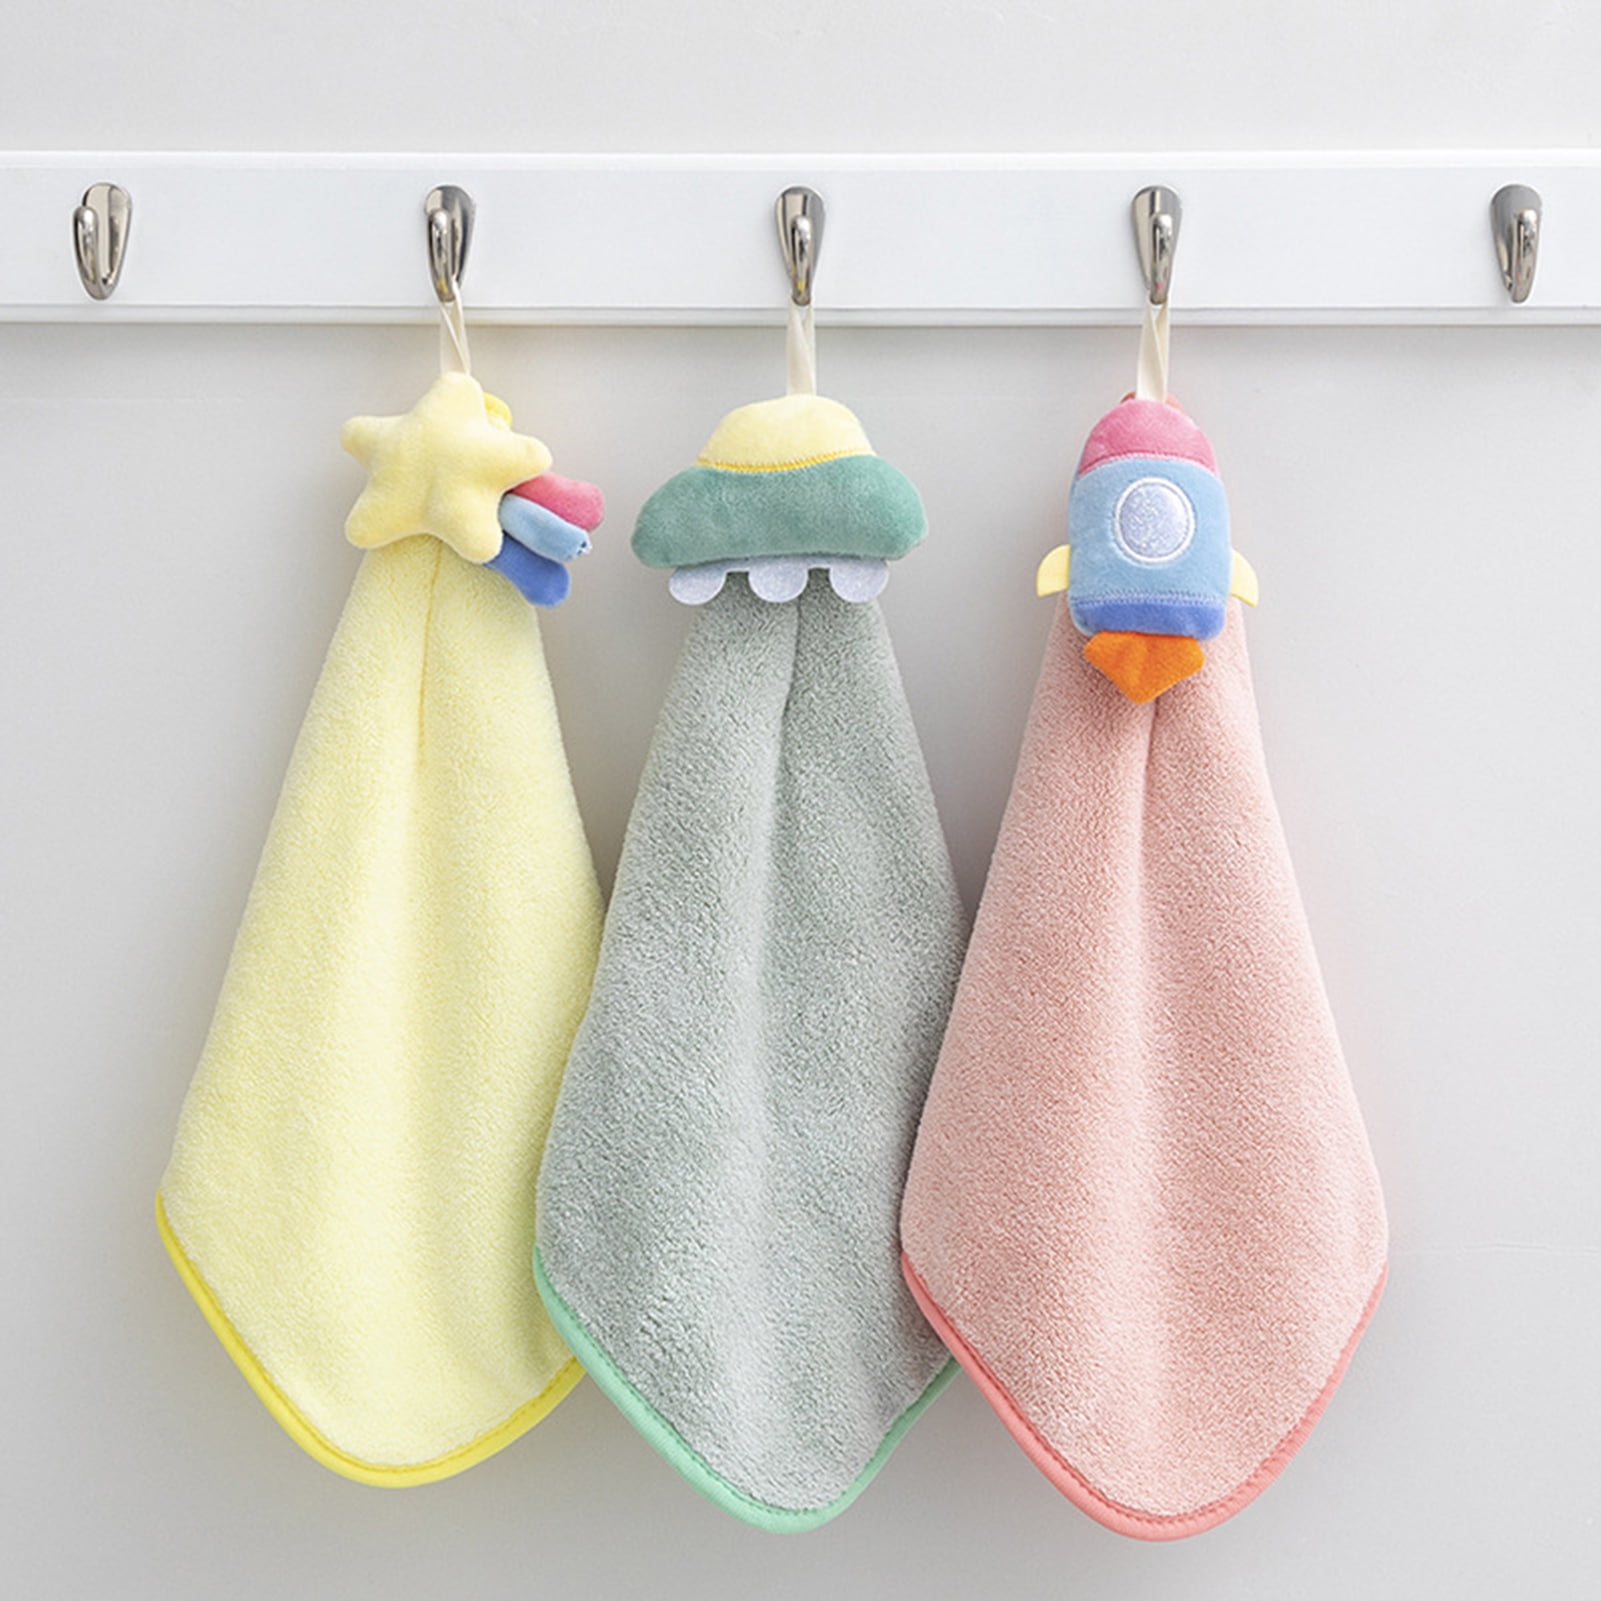 1PC Unisex Kids Adult Fabric Hand Towel Soft Plush Hanging Wipe Bathing Towel 9 